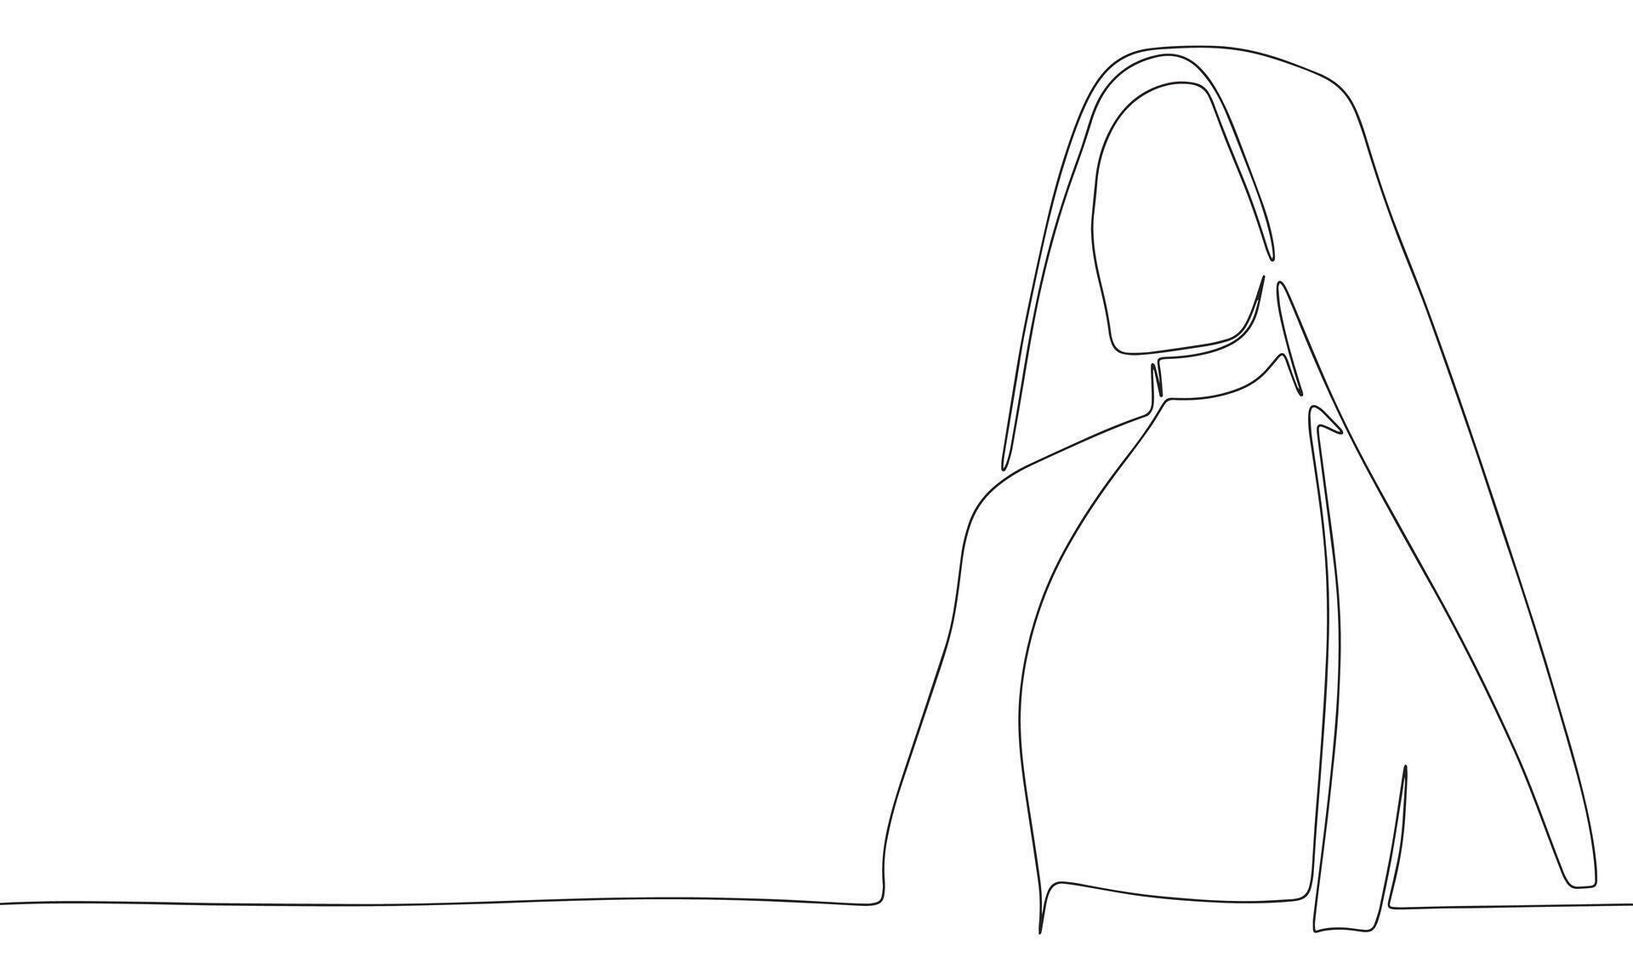 Nun one line continuous. Line art Christian nun, religion banner concept. Hand drawn vector art.